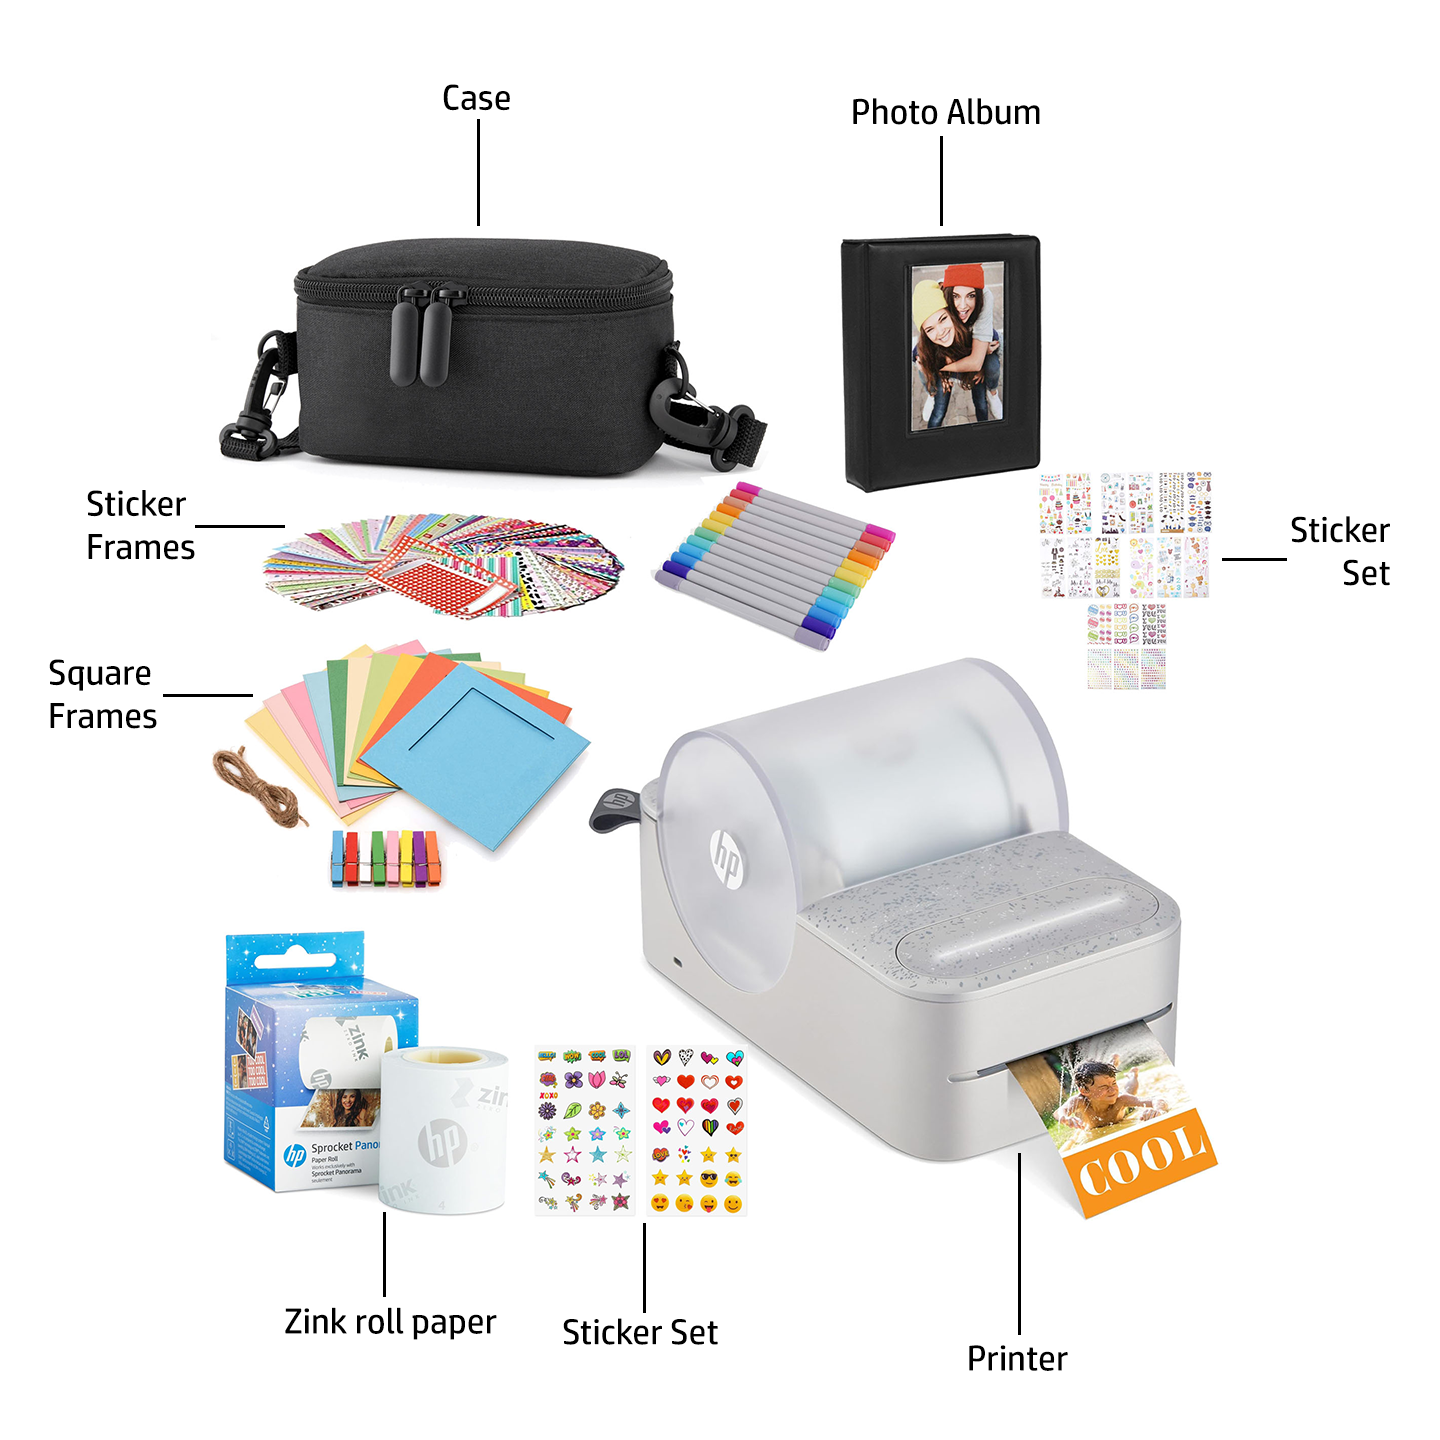 HP Sprocket Panorama Instant Portable Color Label & Photo Printer (Grey) Gift Bundle